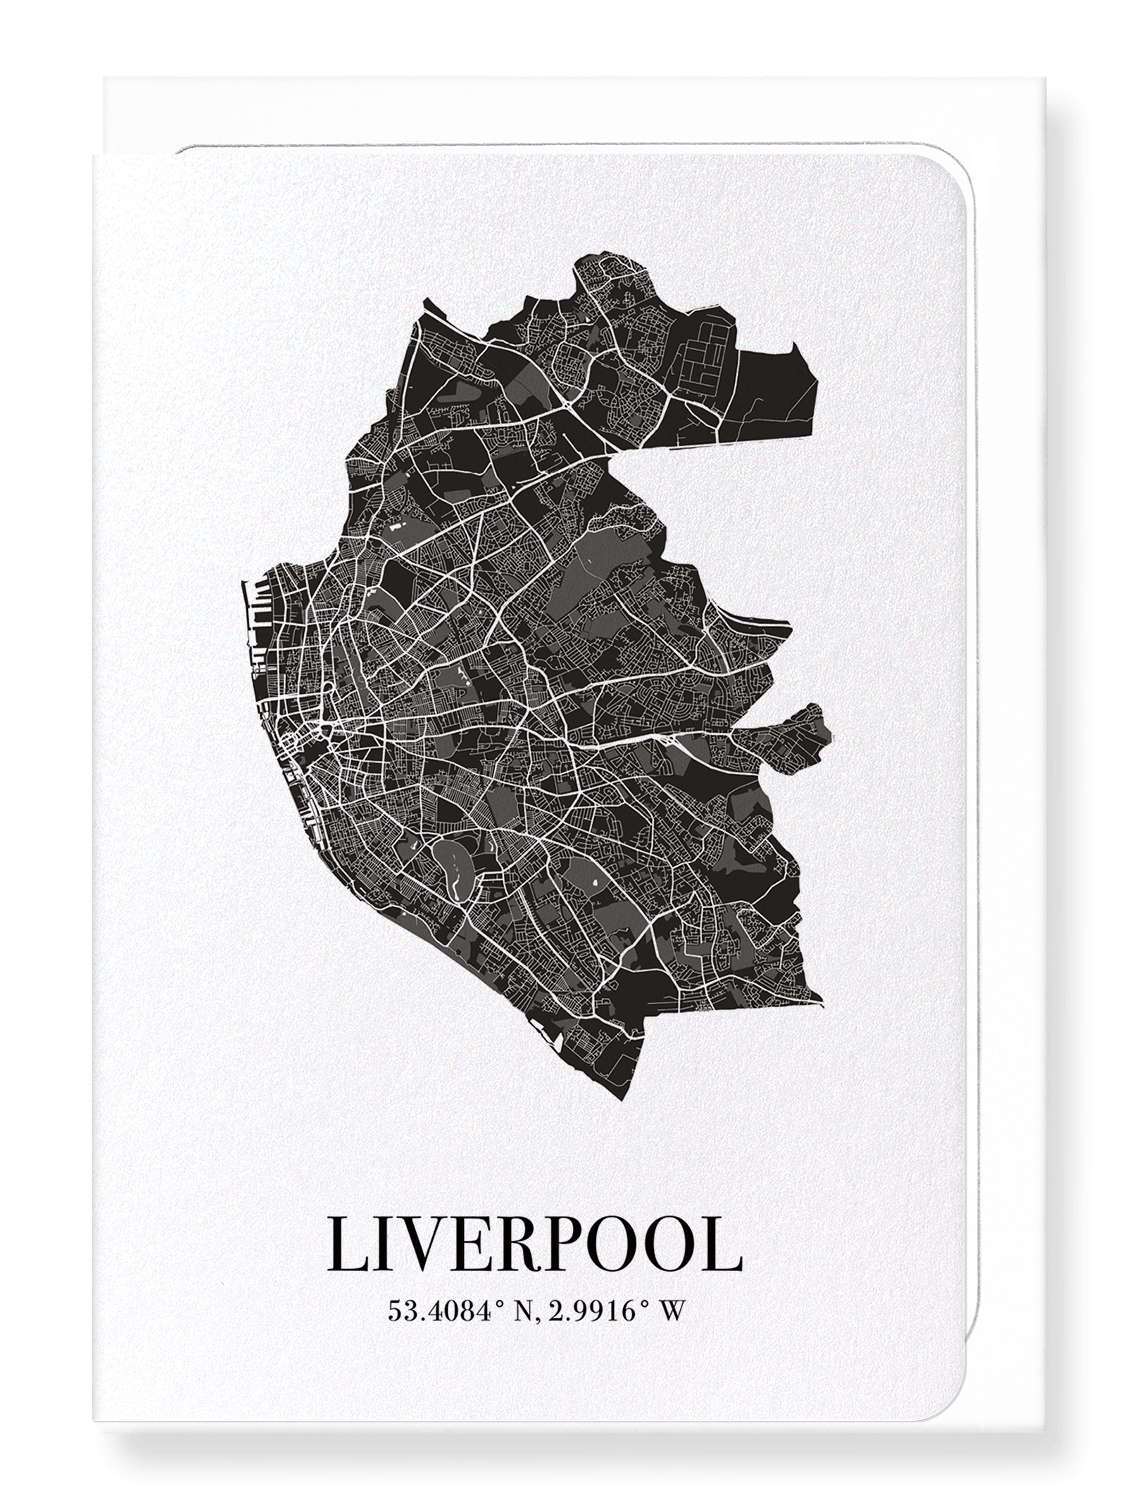 LIVERPOOL CUTOUT: Map Cutout Greeting Card